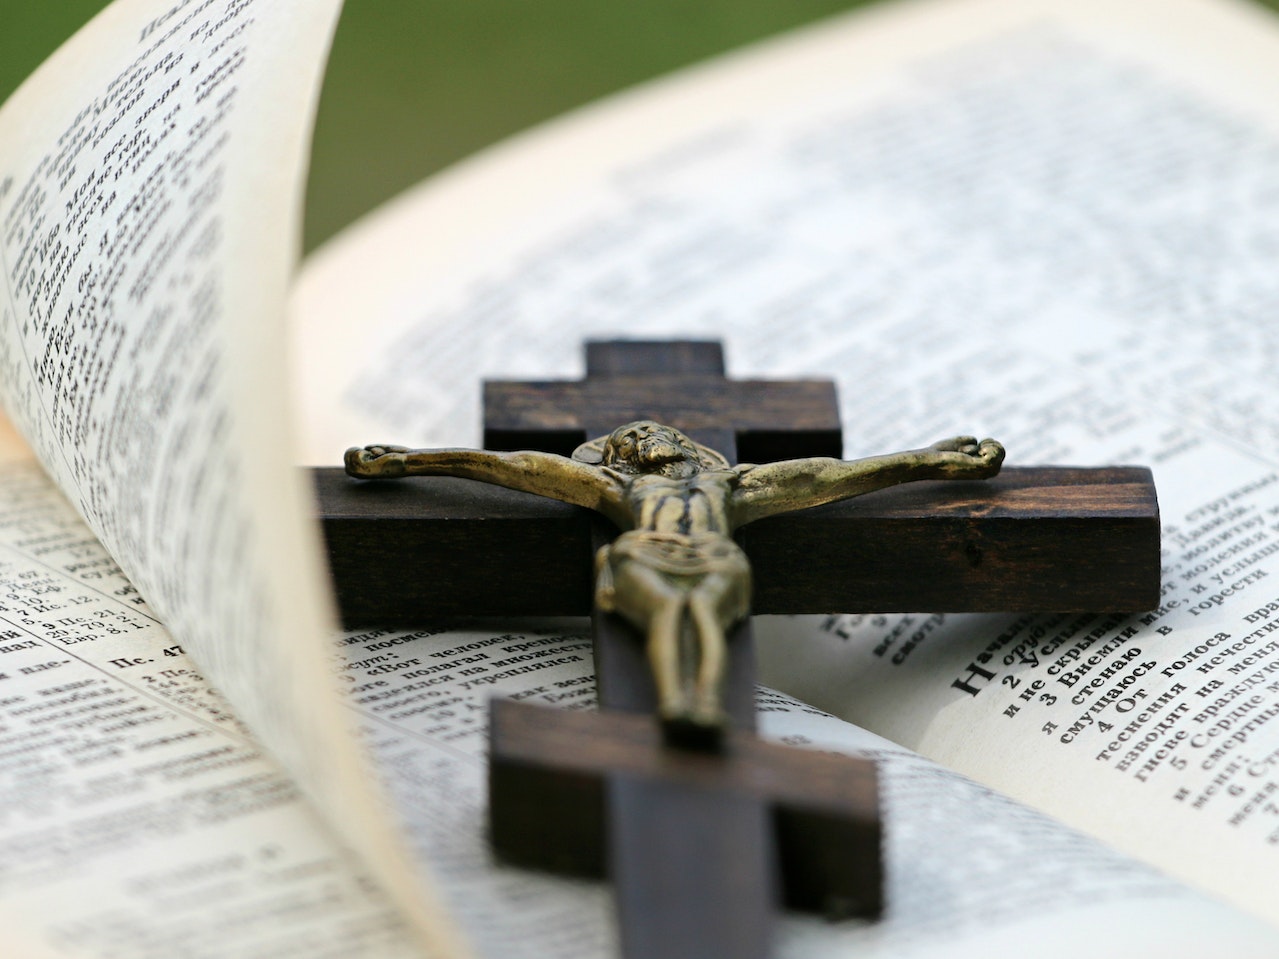 Crucifix on top of an open bible